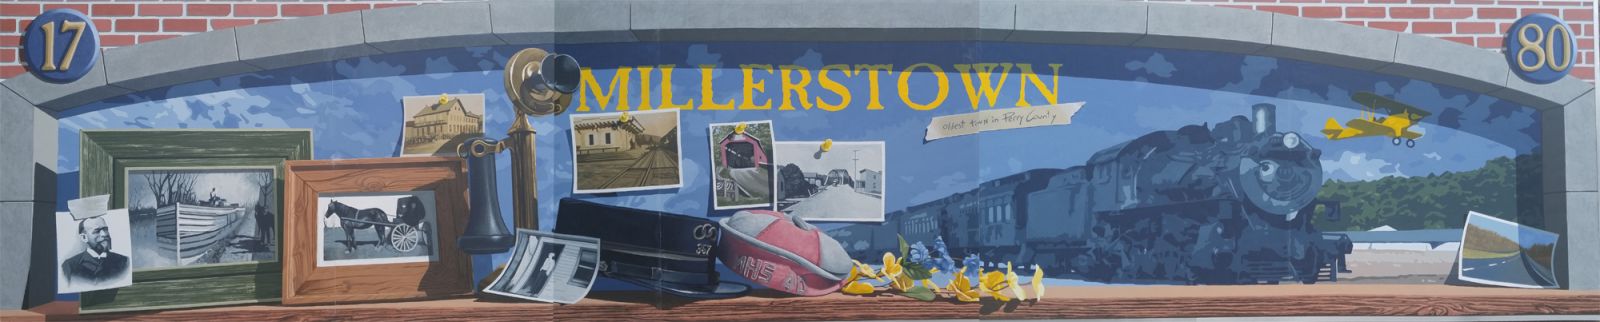 Millerstown mural